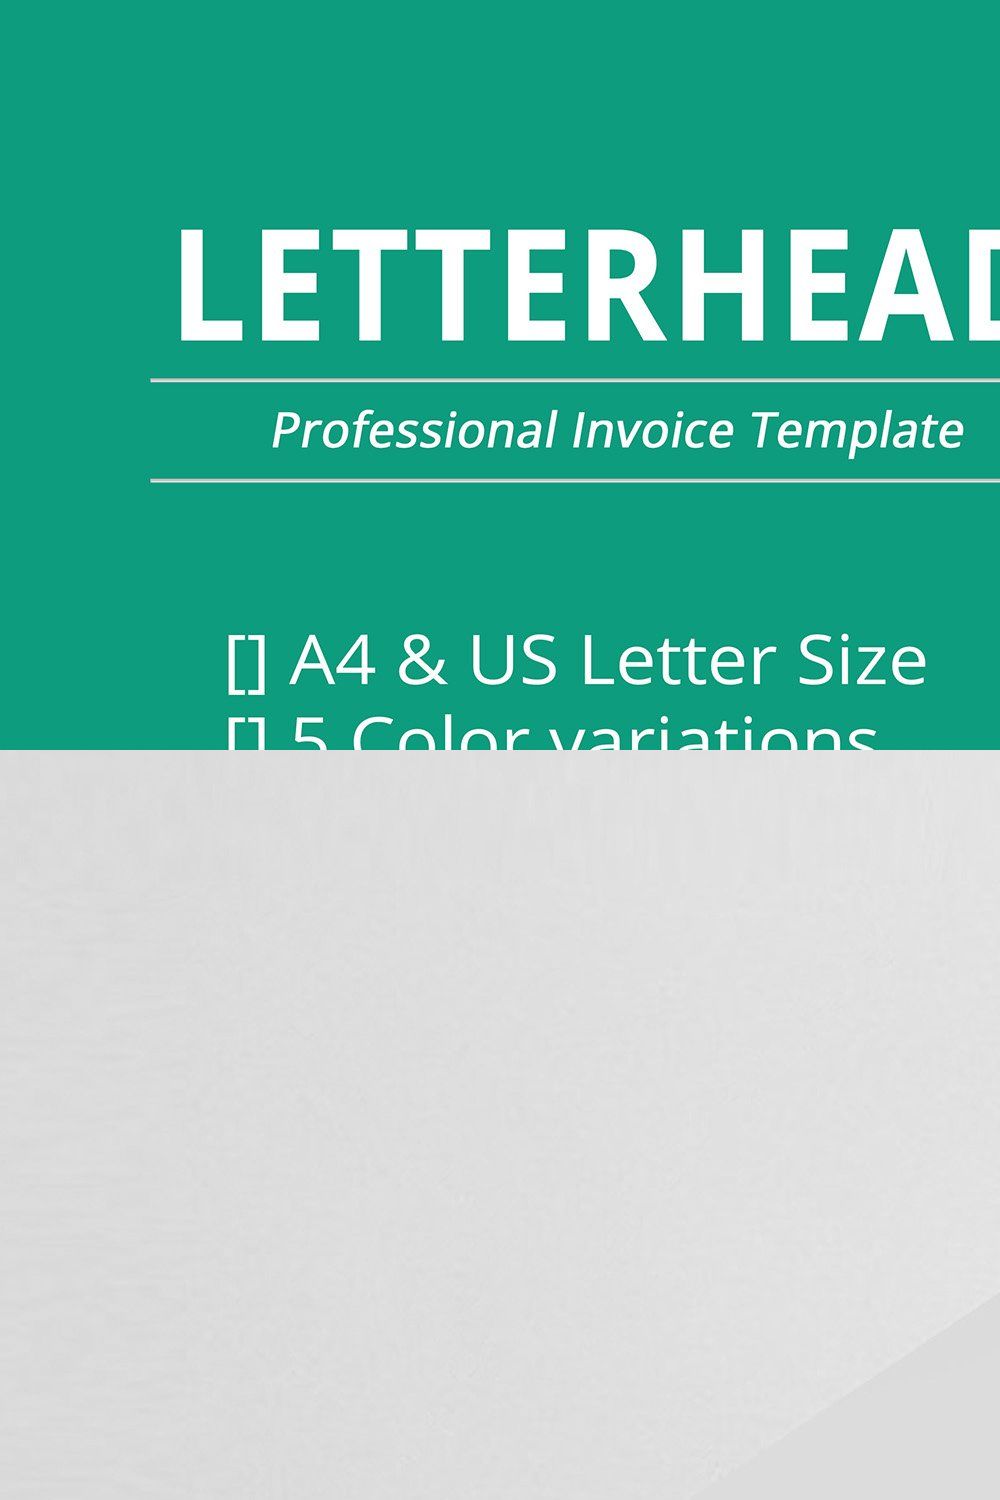 Letterhead Template pinterest preview image.